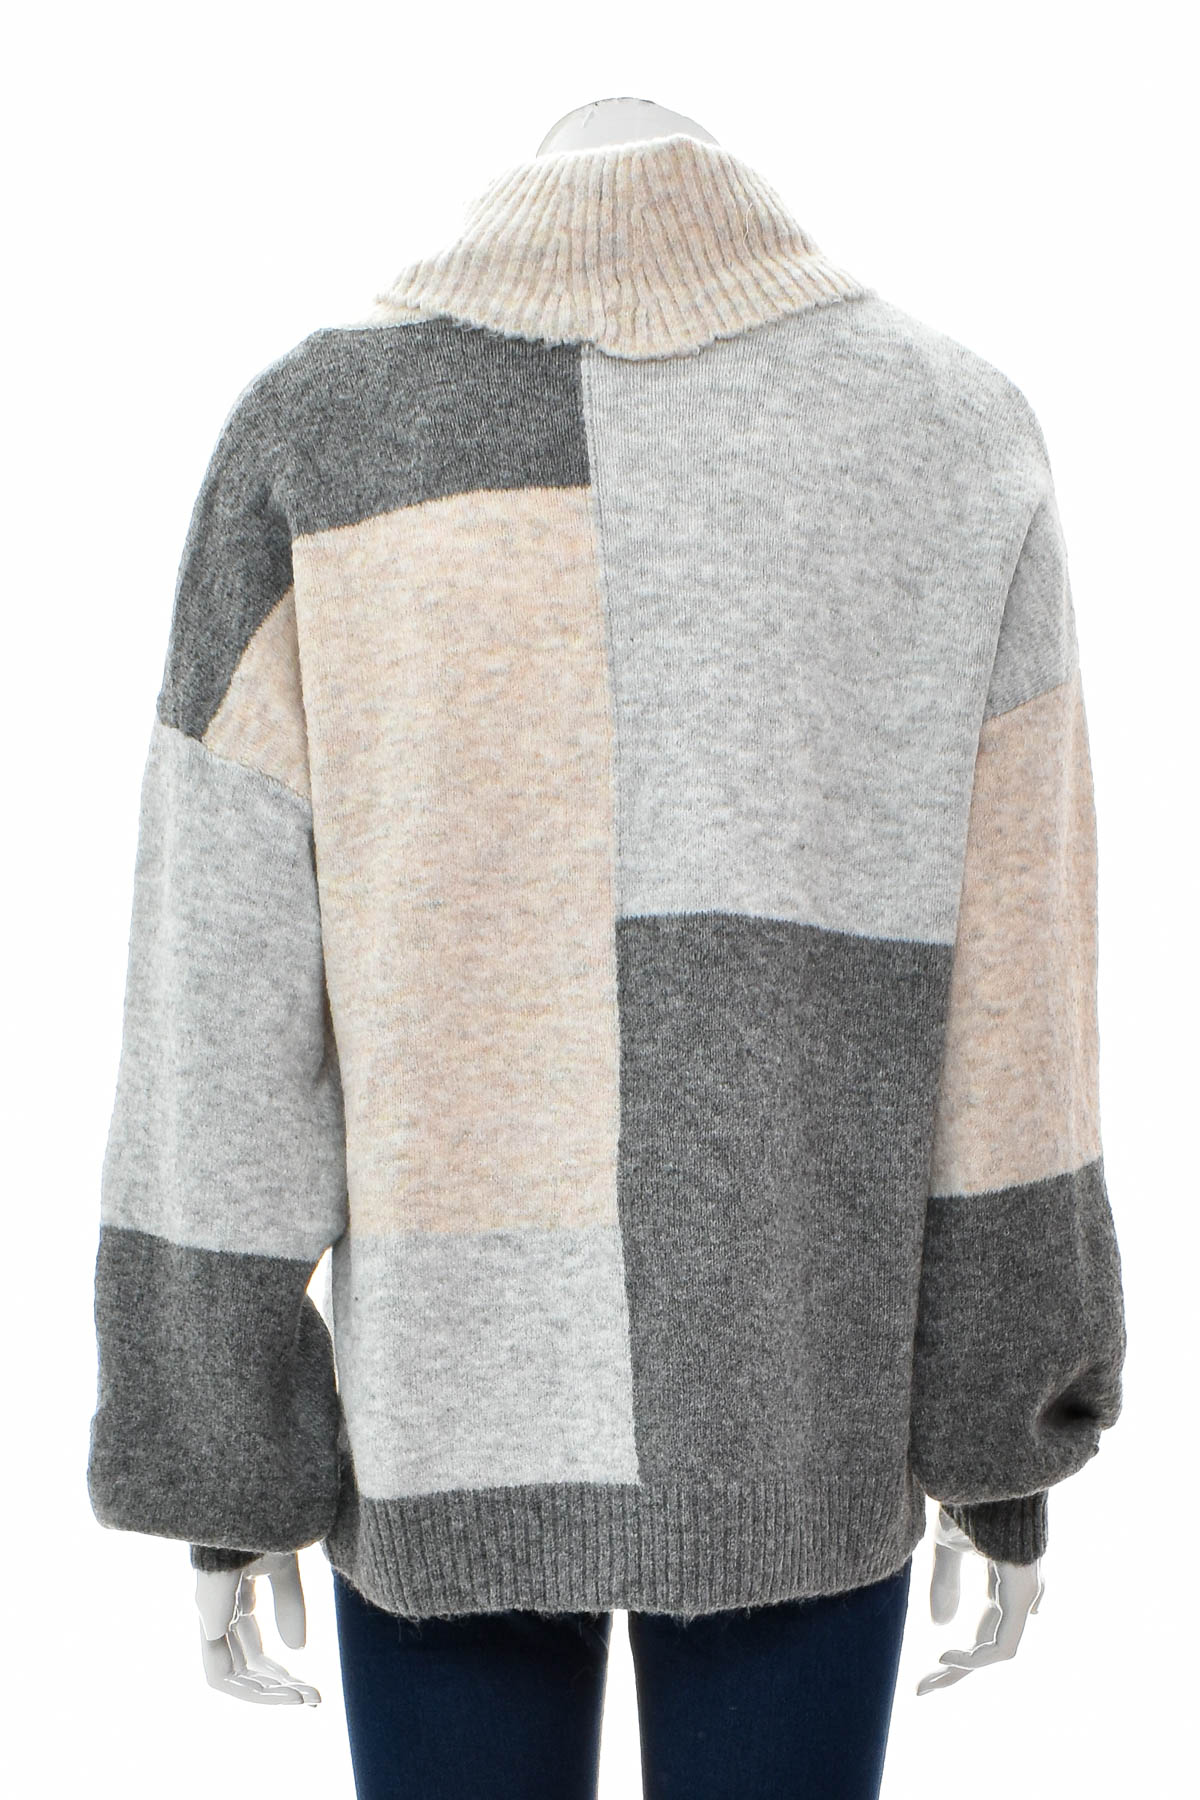 Women's sweater - Staccato - 1